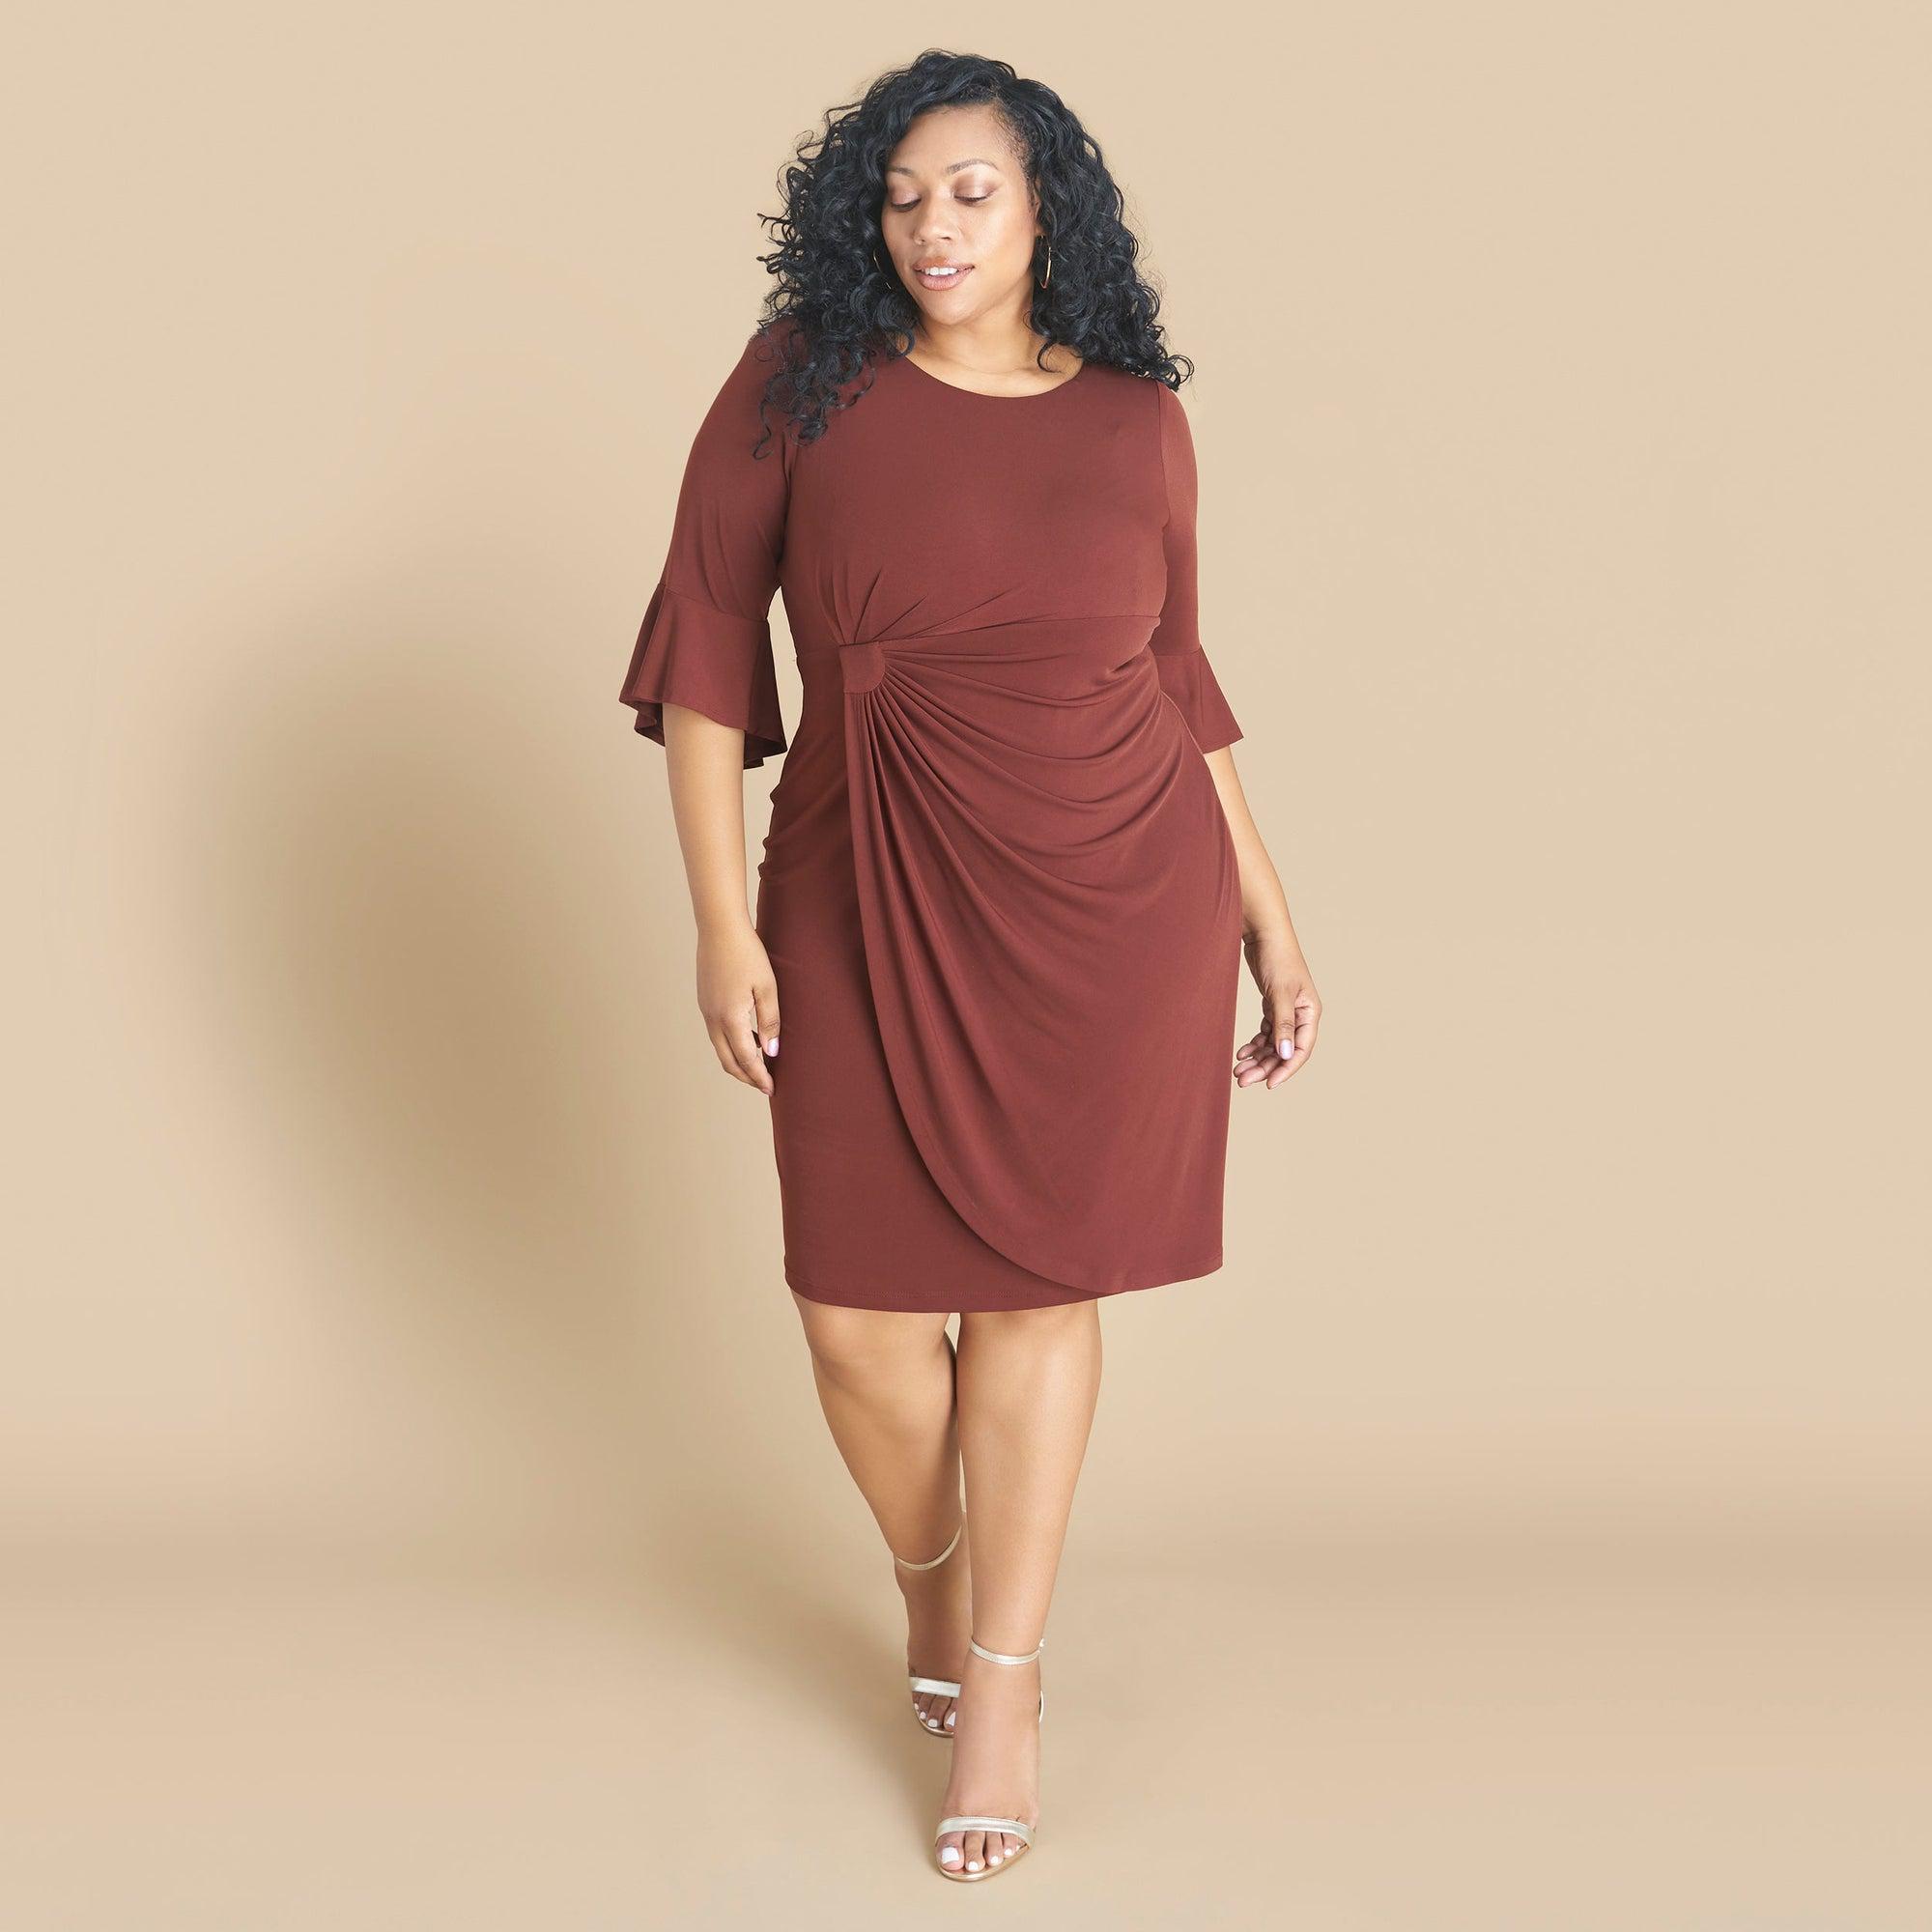 Woman posing wearing Cinnamon Lisa 2.0 Cinnamon Faux Wrap Dress from Connected Apparel